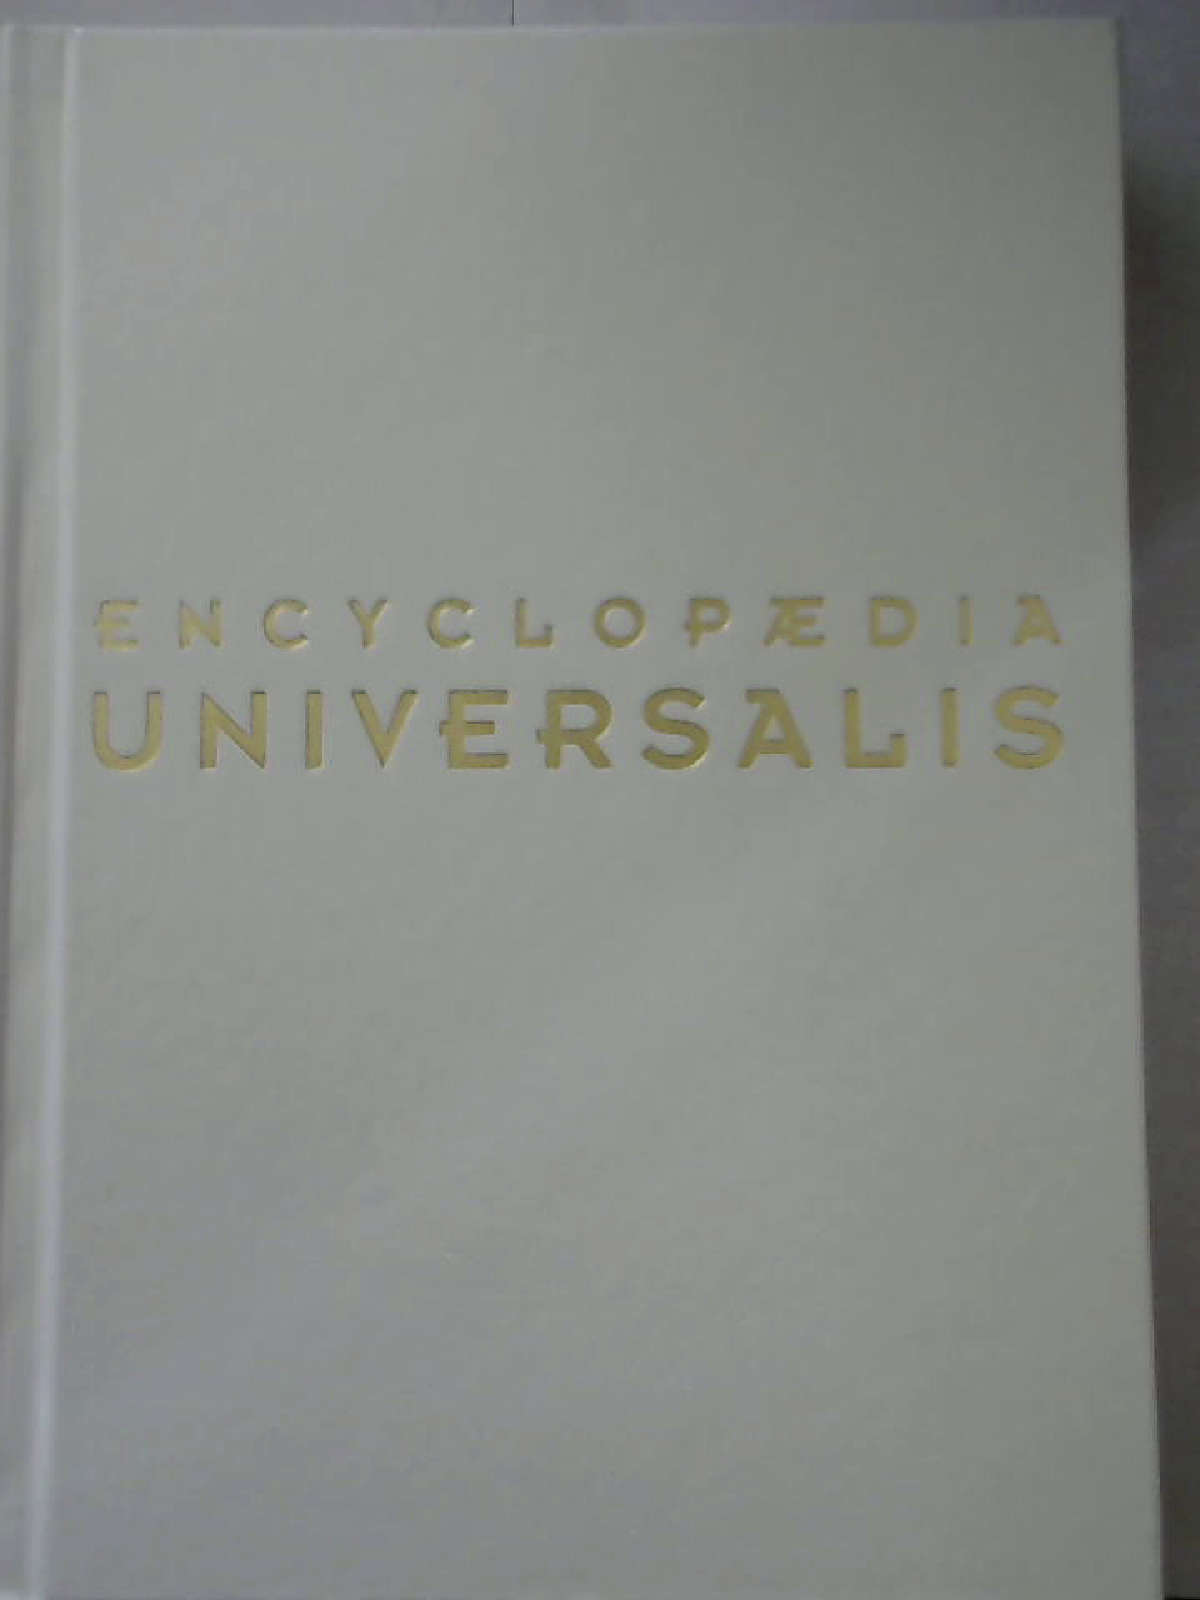 Encyclopaedia Universalis